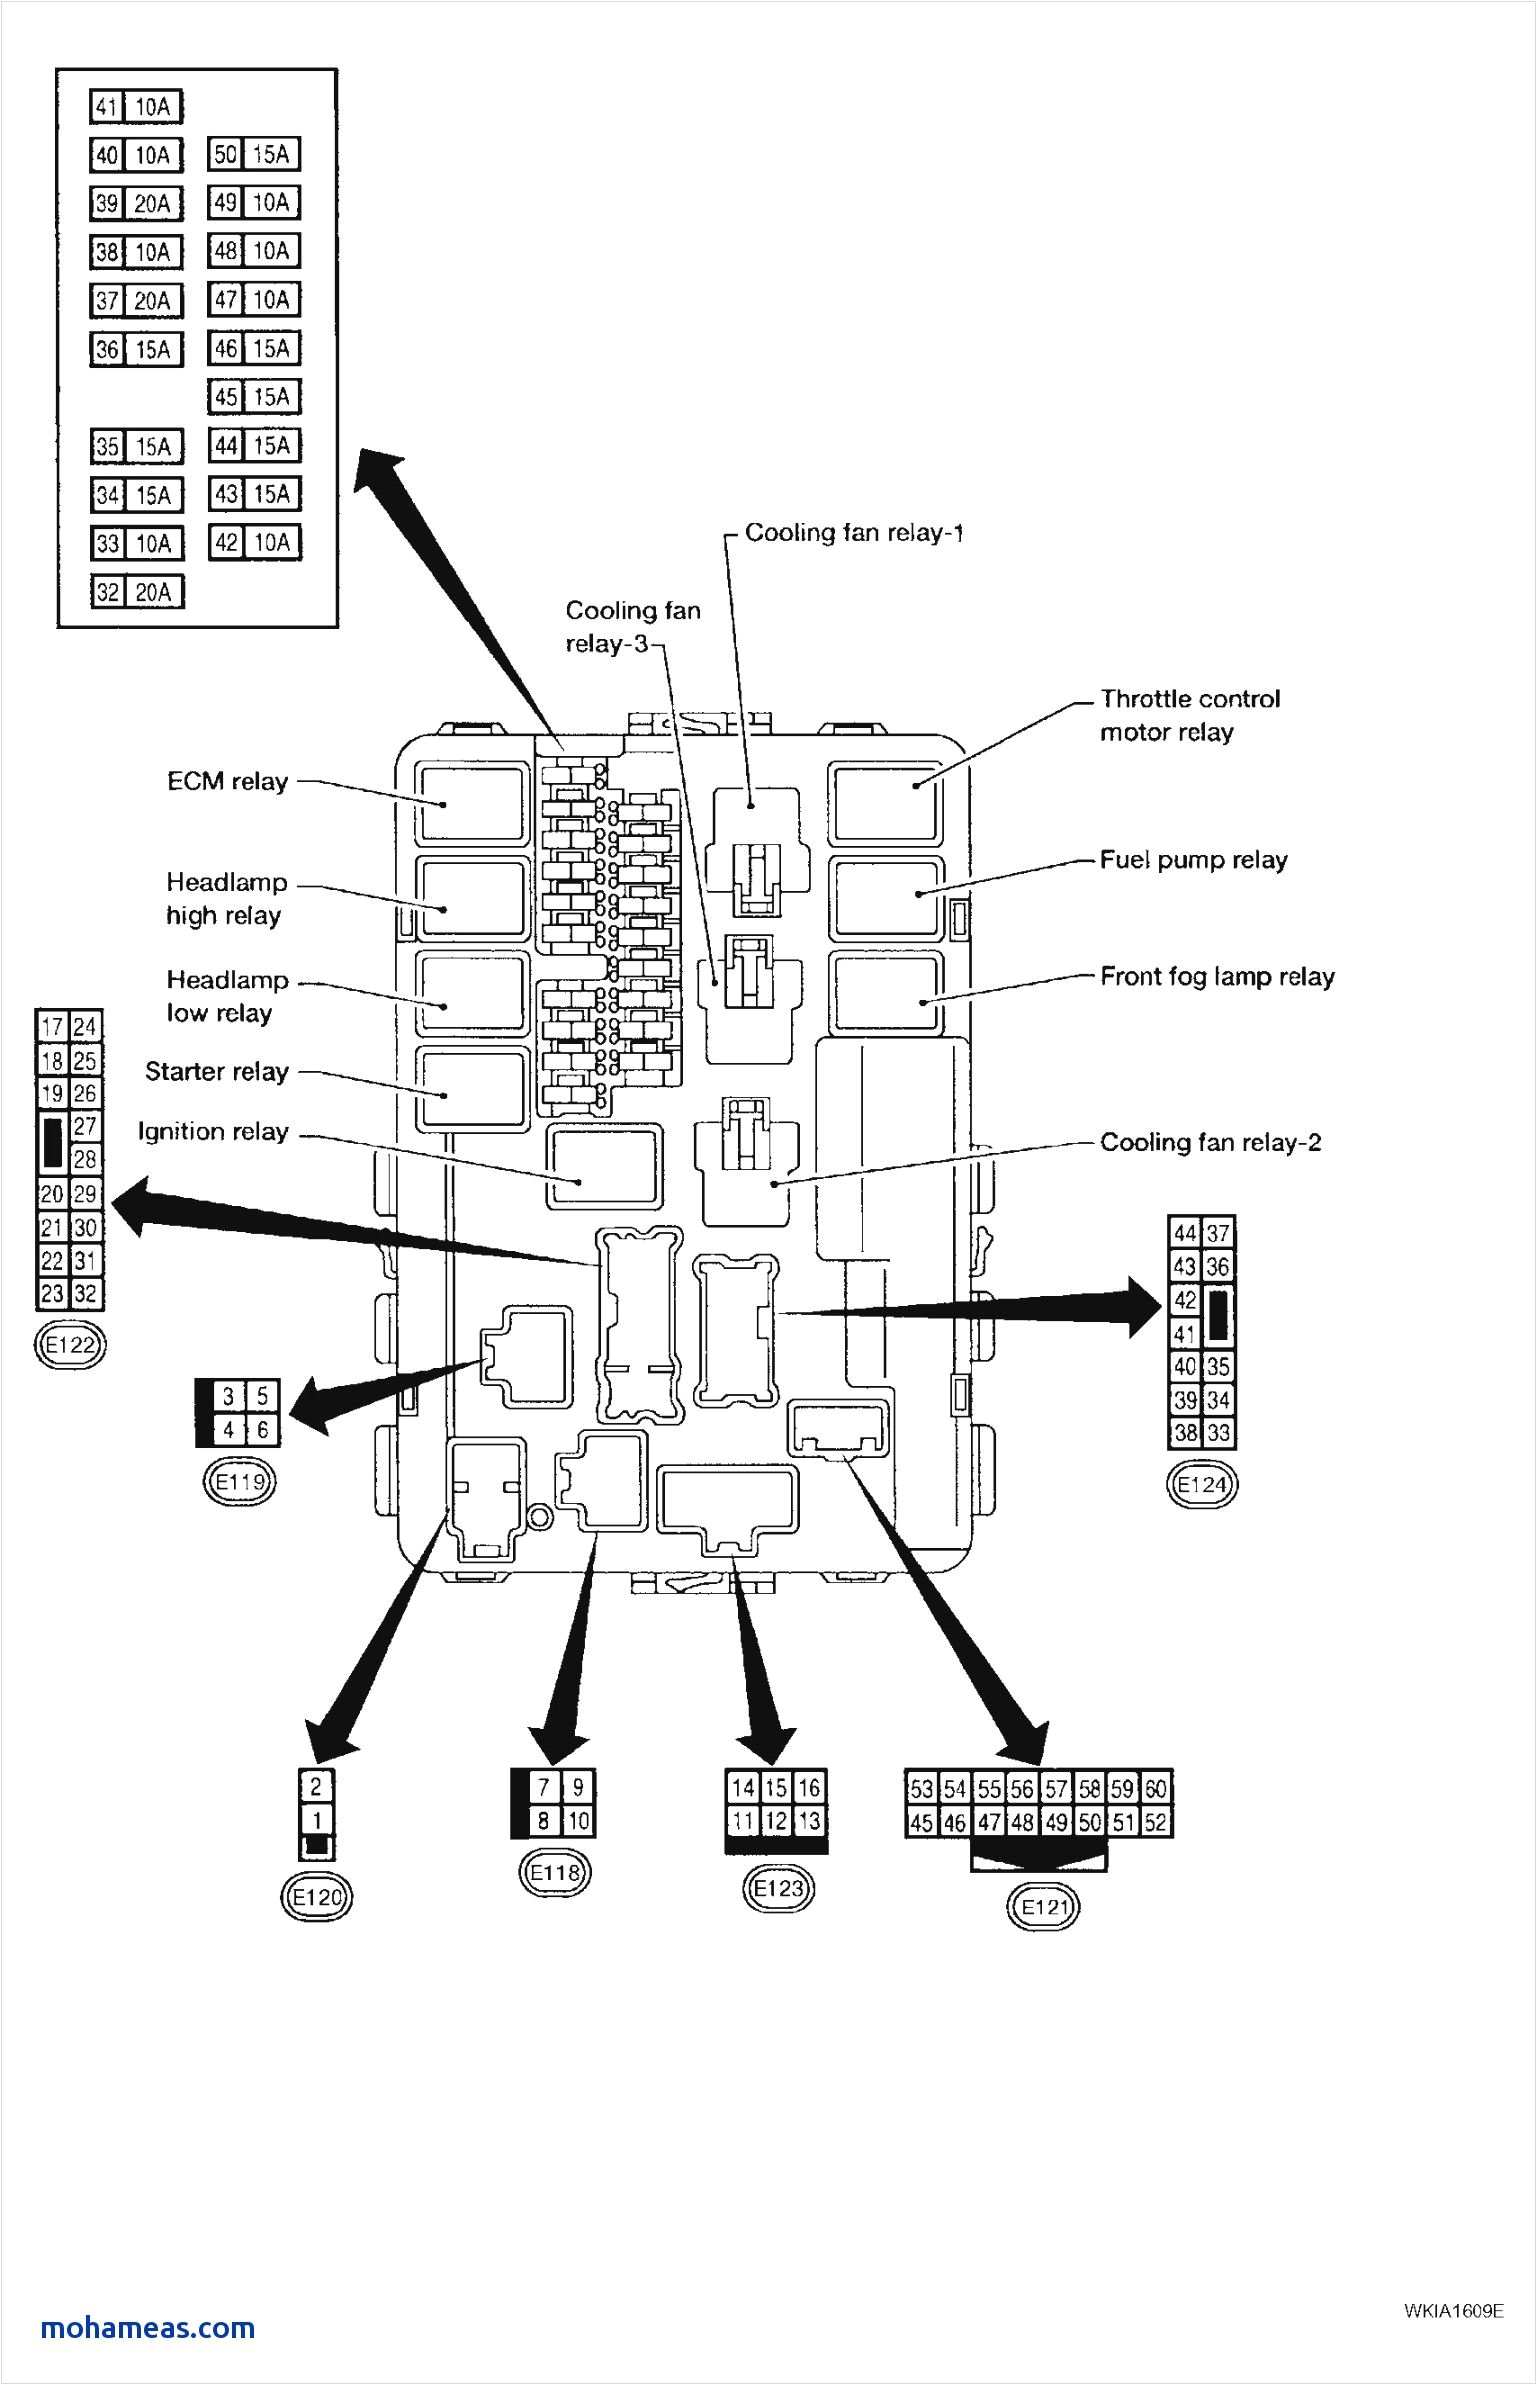 1993 nissan maxima fuse box wiring schematic diagram 88 mix 95 nissan maxima fuse box wiring